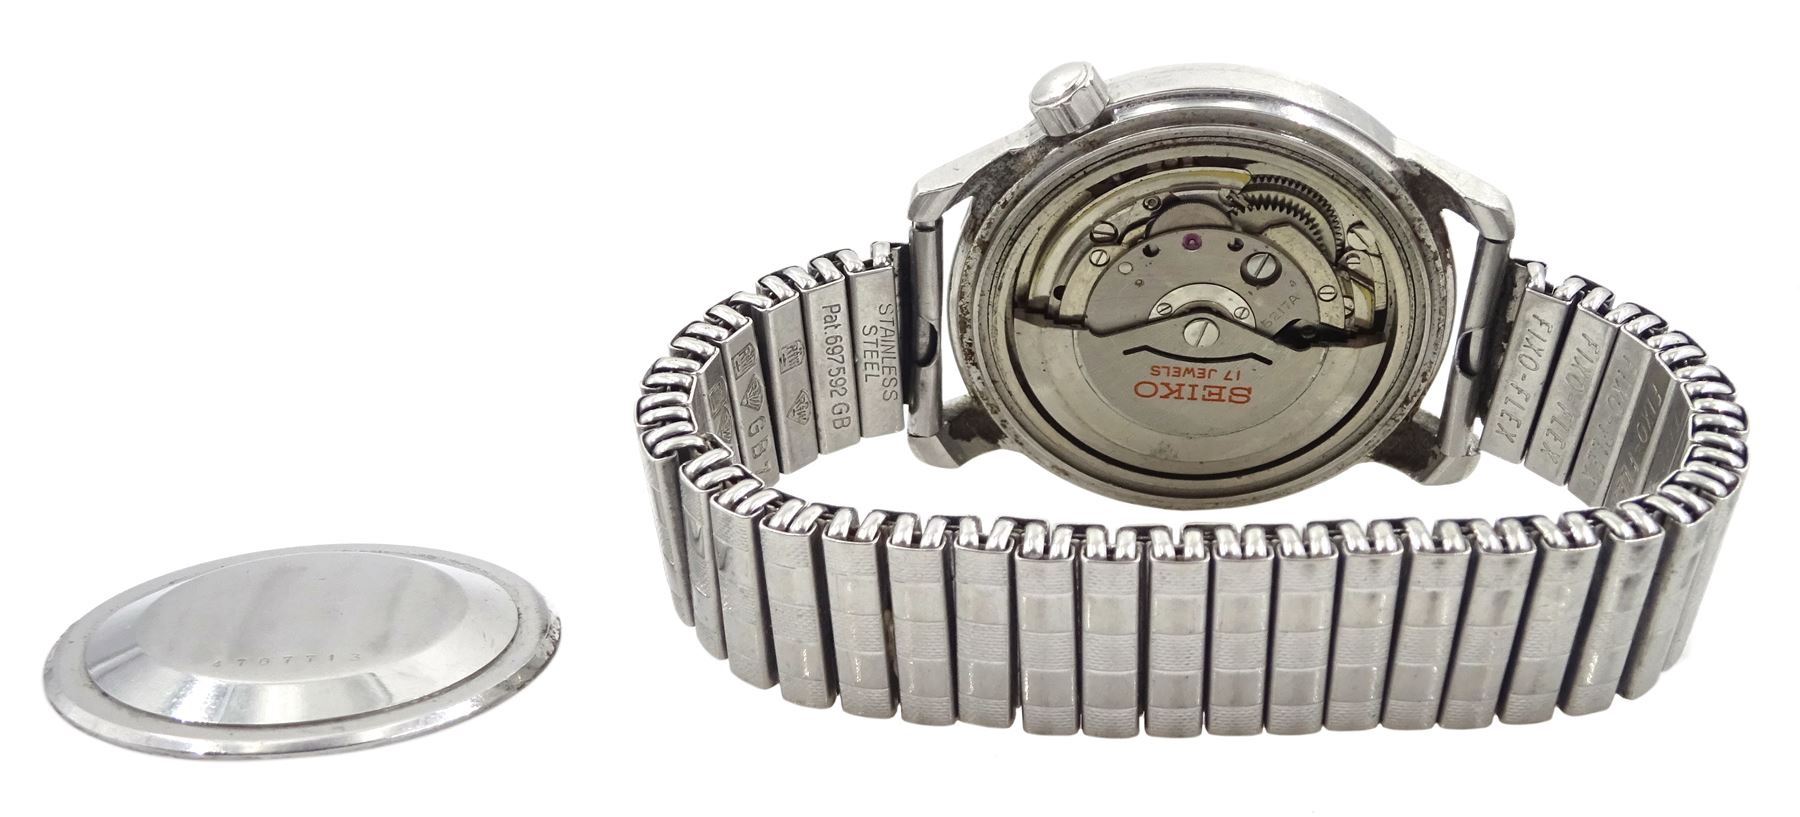 Seiko World Time Diashock 17 Jewels automatic wristwatch - Image 3 of 6